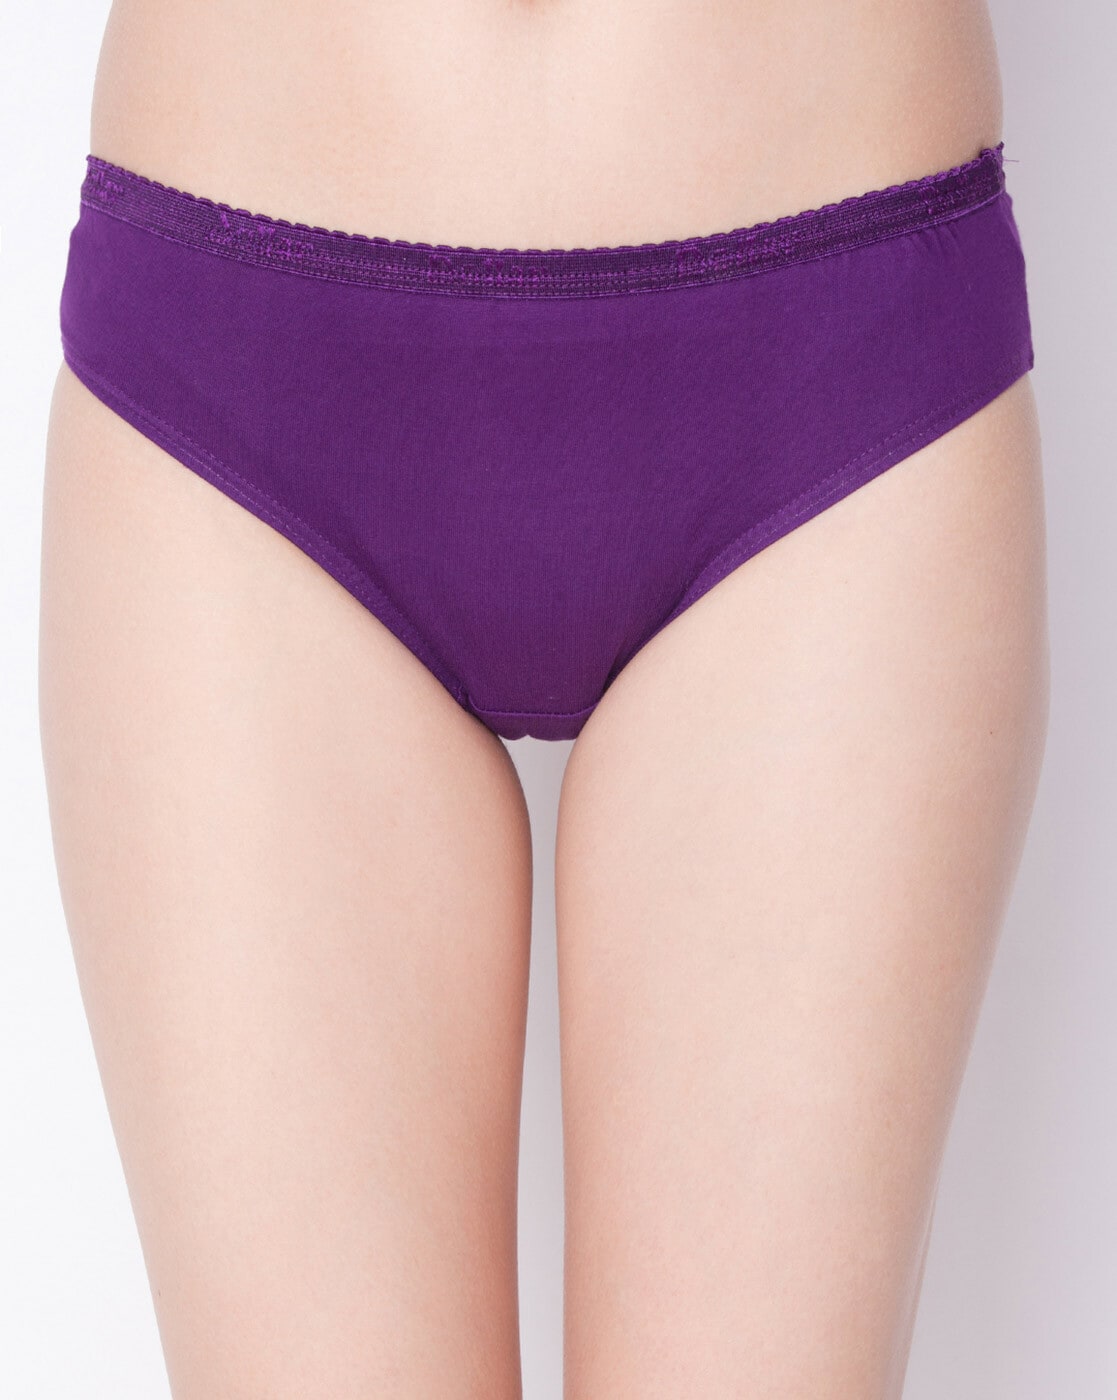 Bulk Girl's Panties - 5 Pack, Assorted Colors, Size 12 - DollarDays